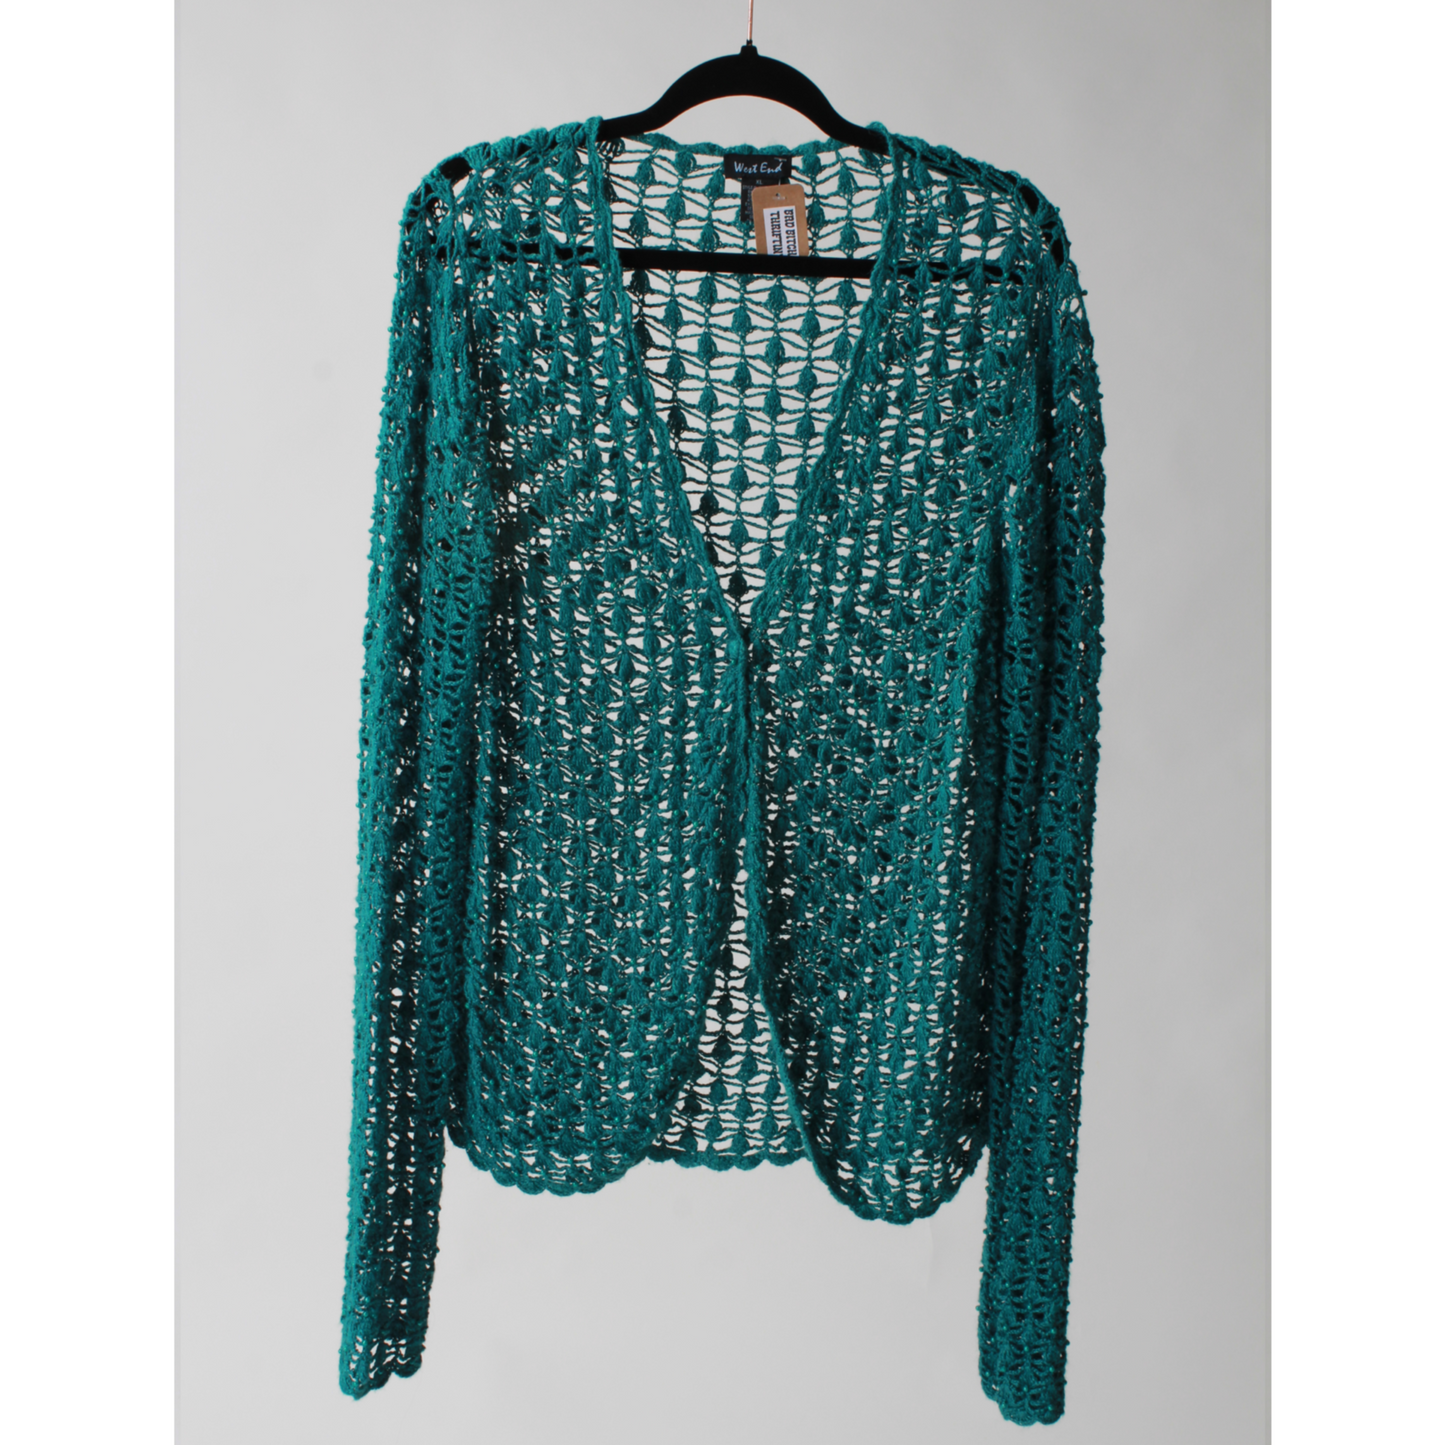 Beaded Knit Cardigan (XL)